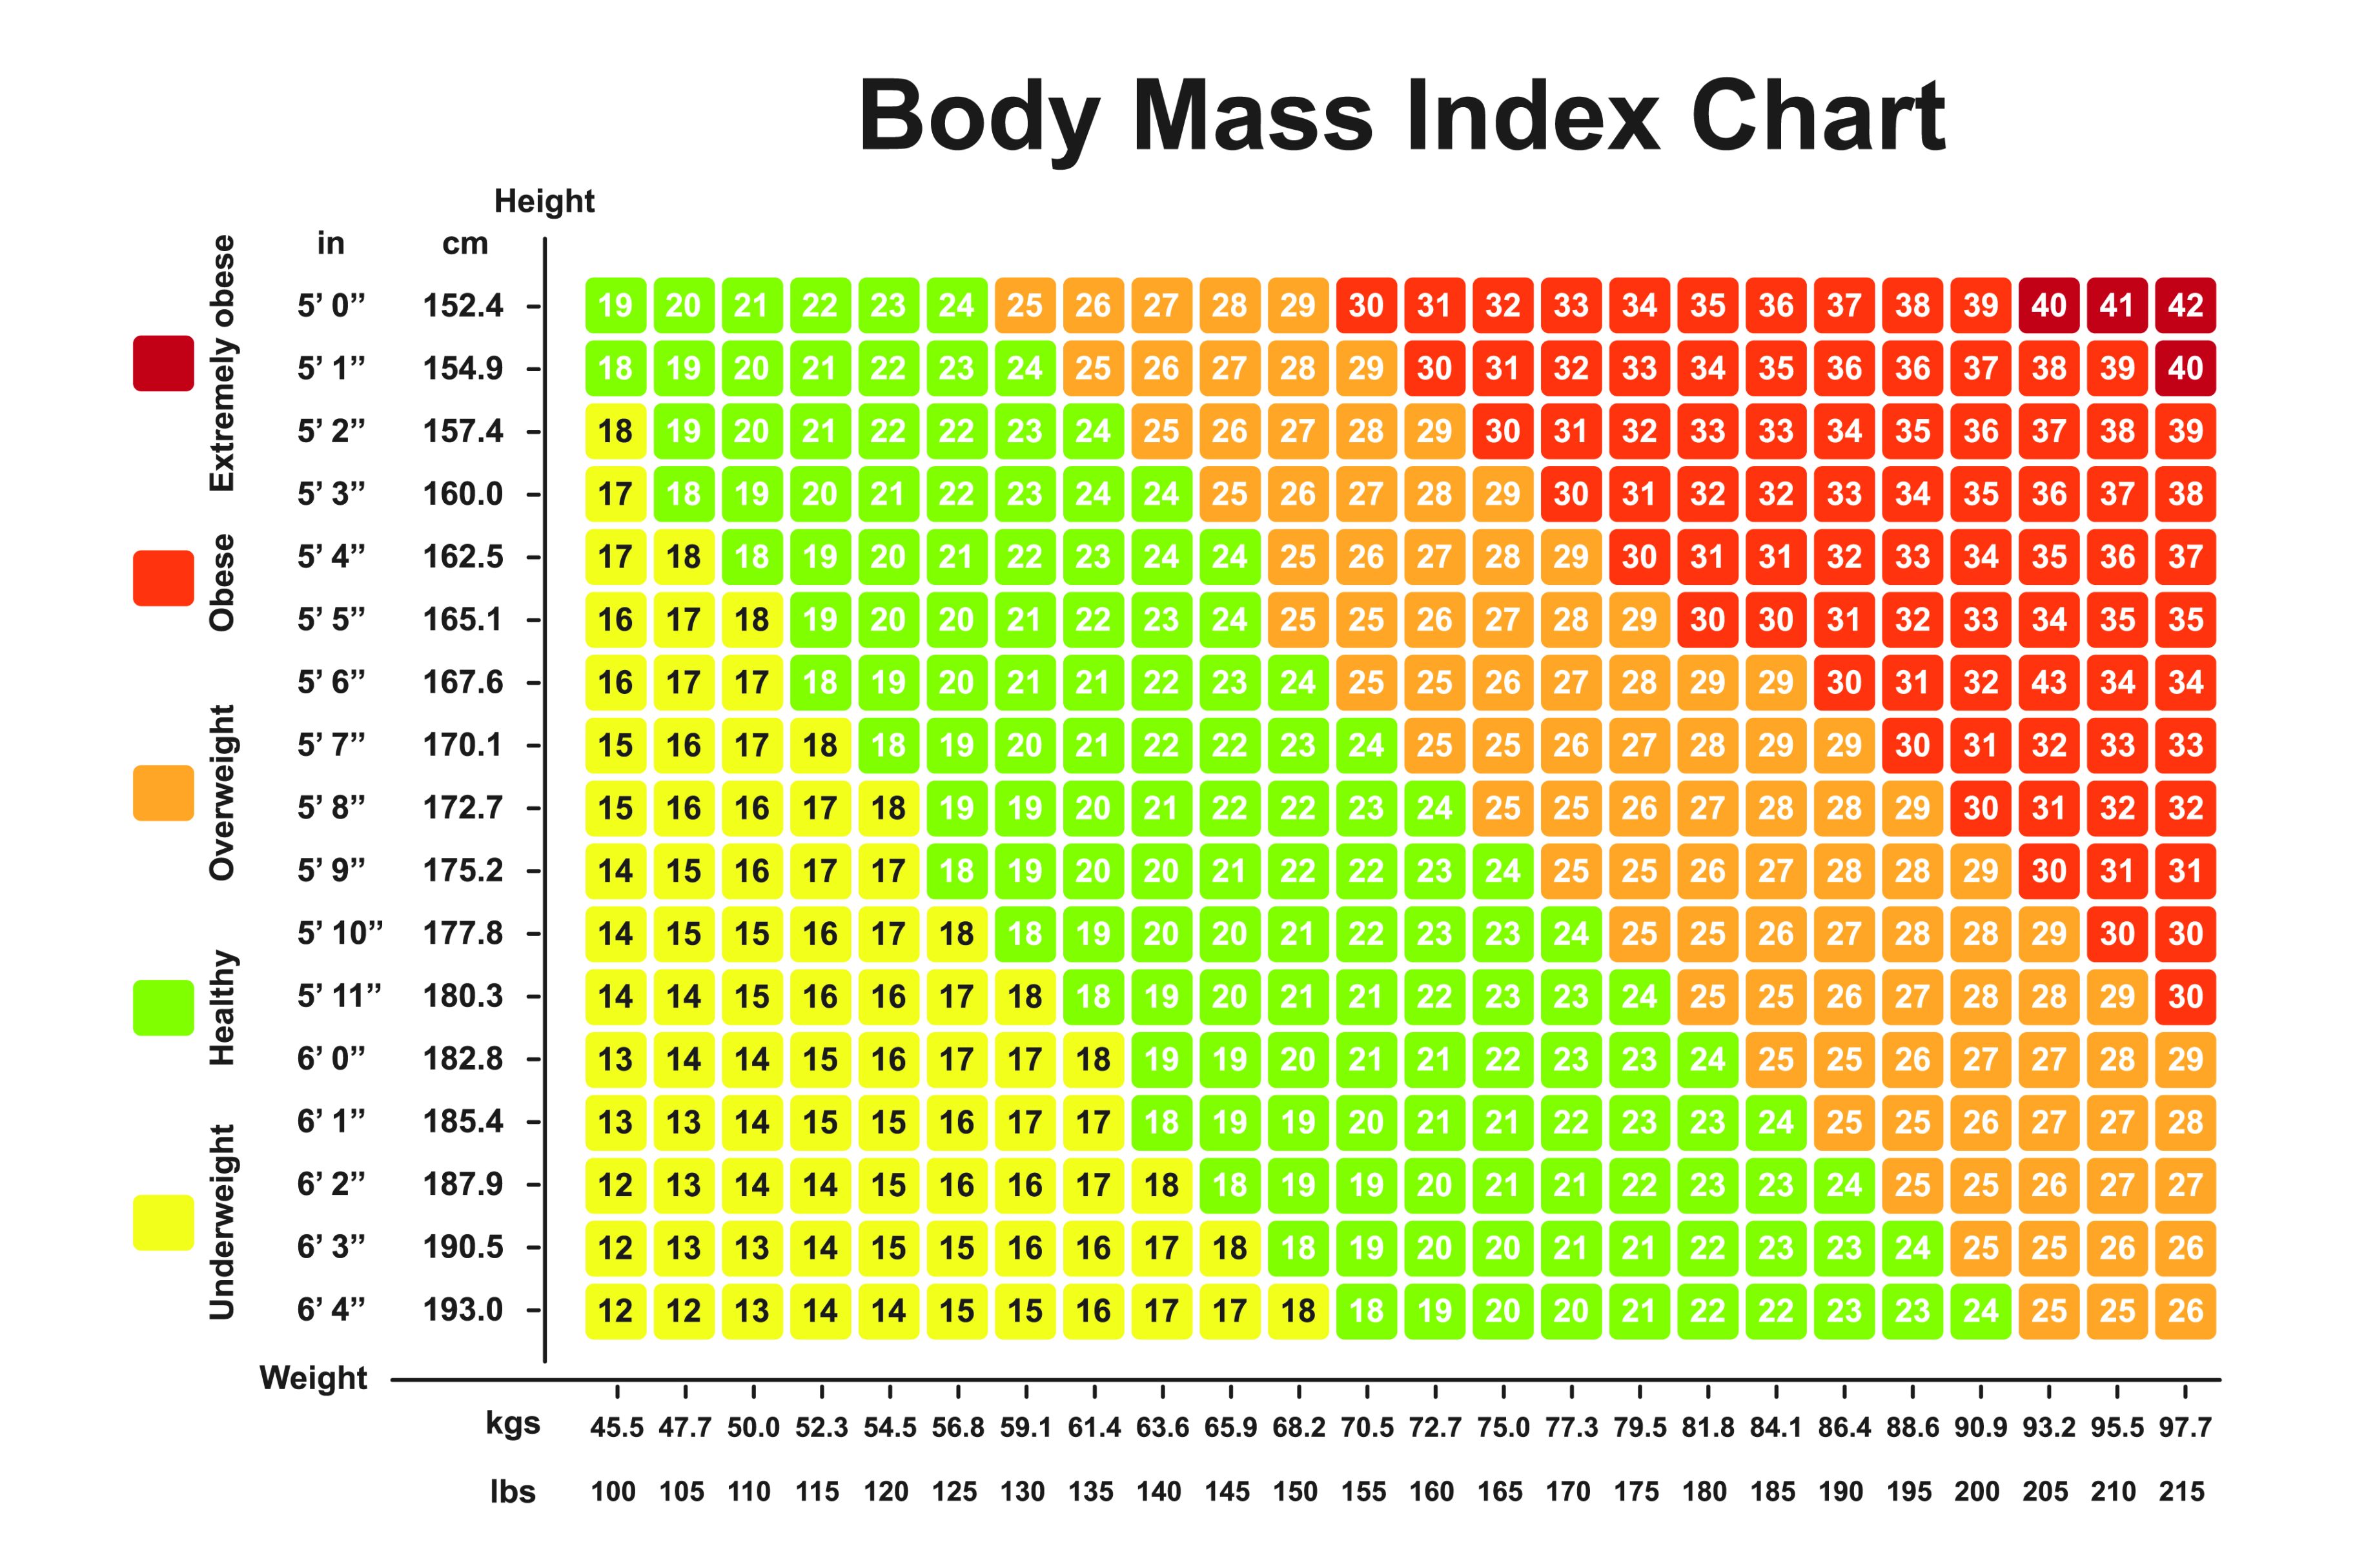 BMI charts